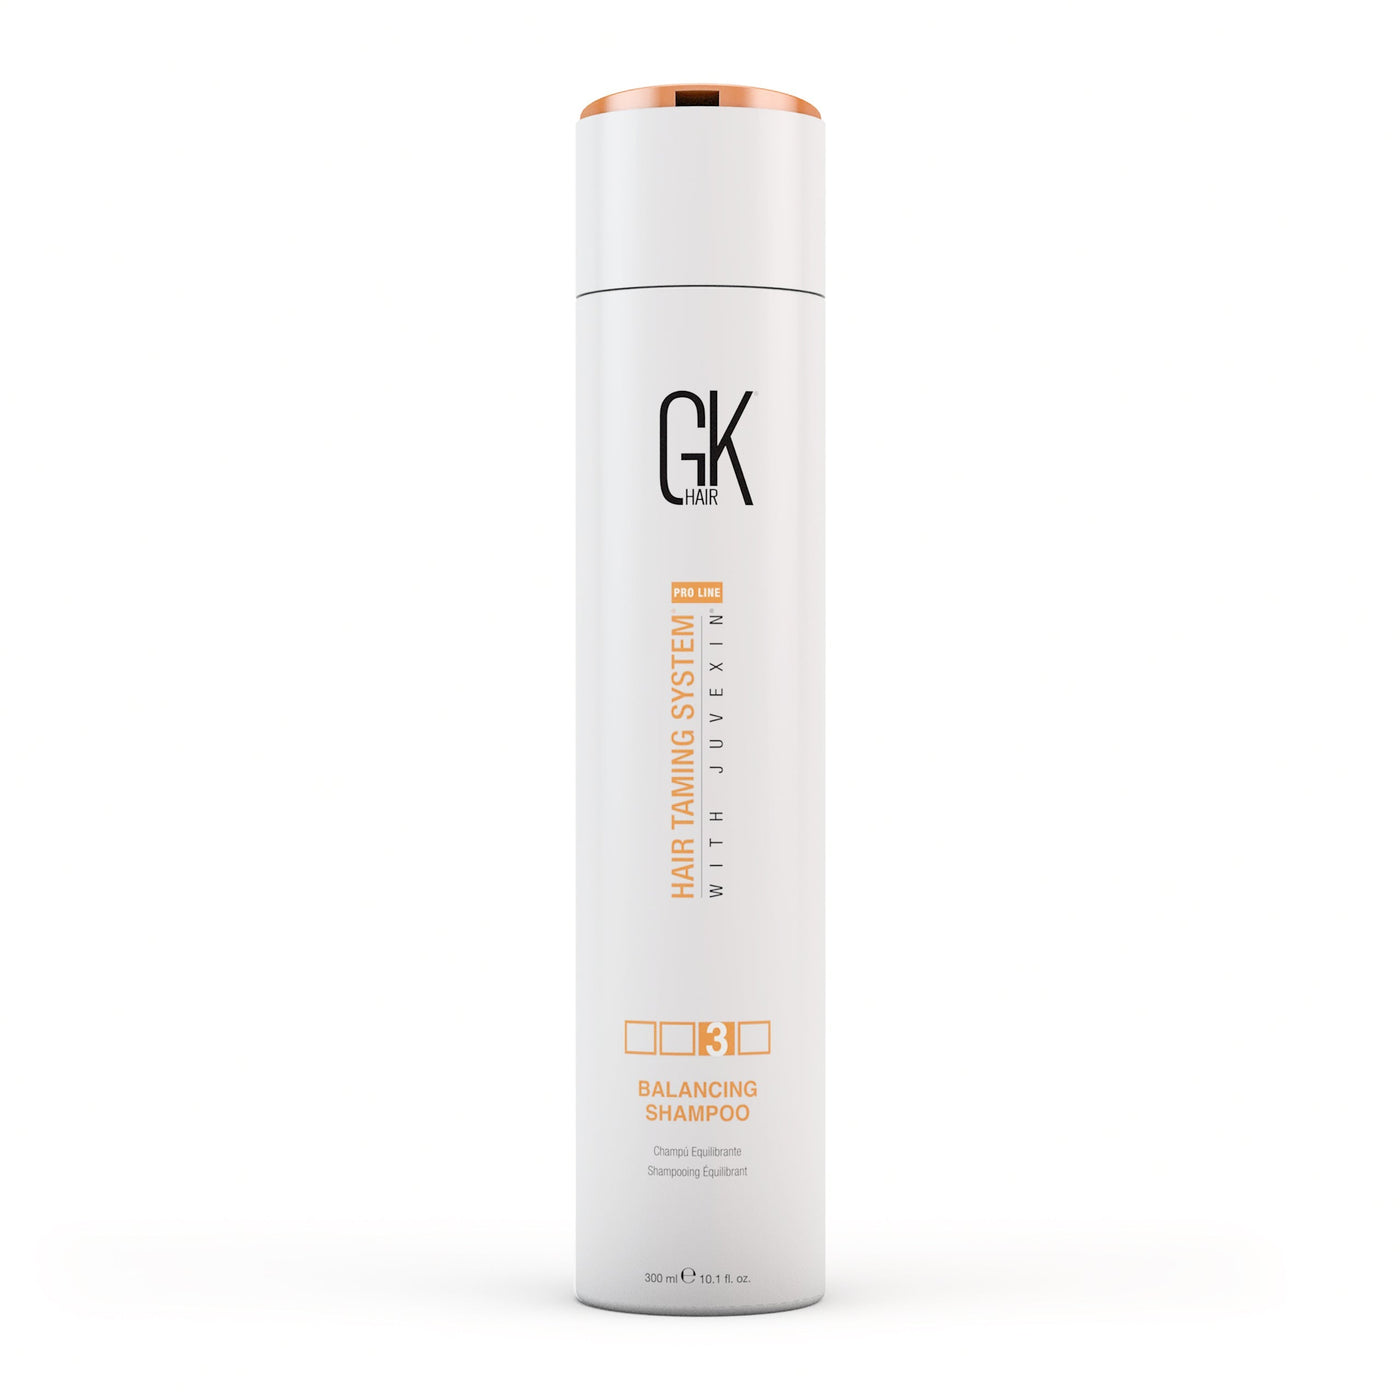 GK Hair Oily Hair Shampoo - Enjoy Best Balancing Shampoo with Cleanse Sensor